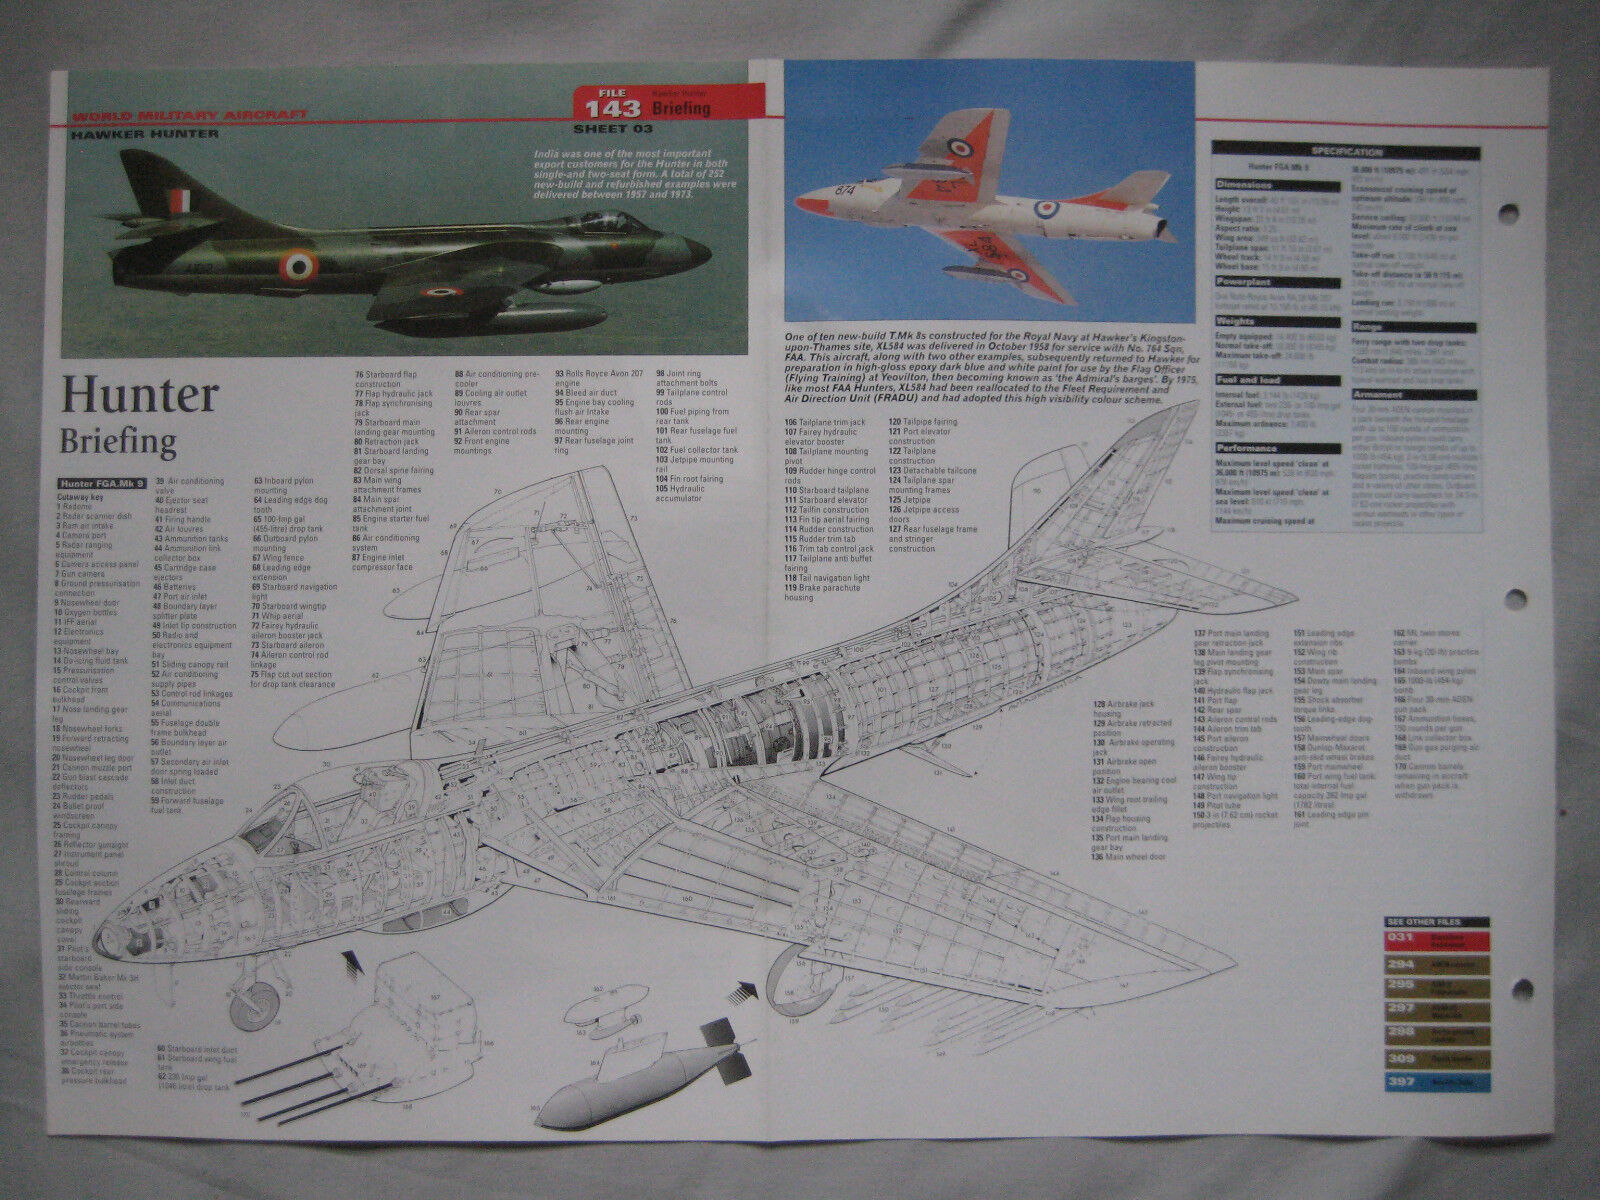 Cutaway Key Drawing of the Hawker Hunter